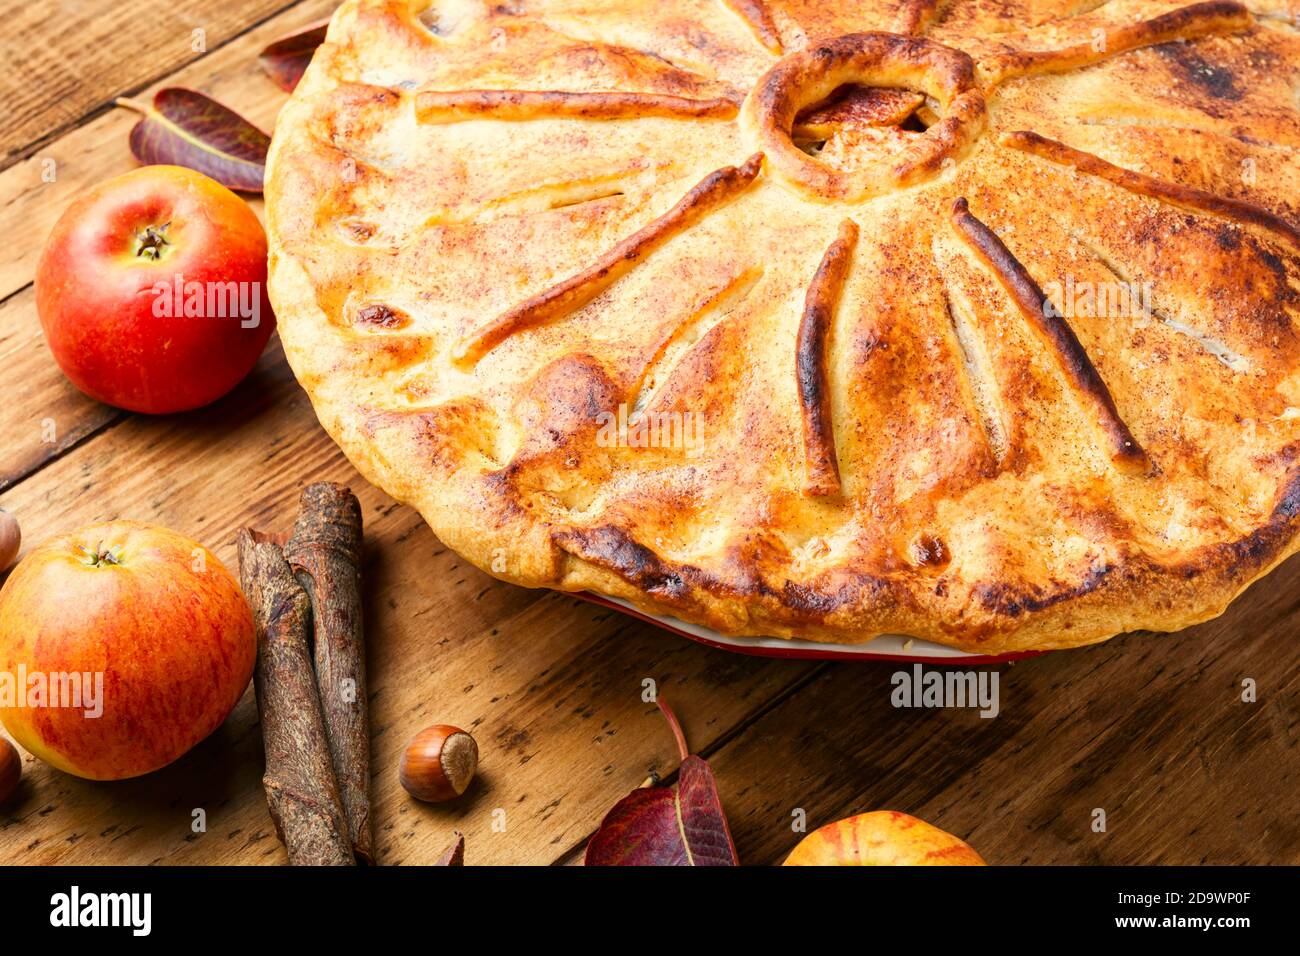 Tasty homemade apple pie on wooden table Stock Photo